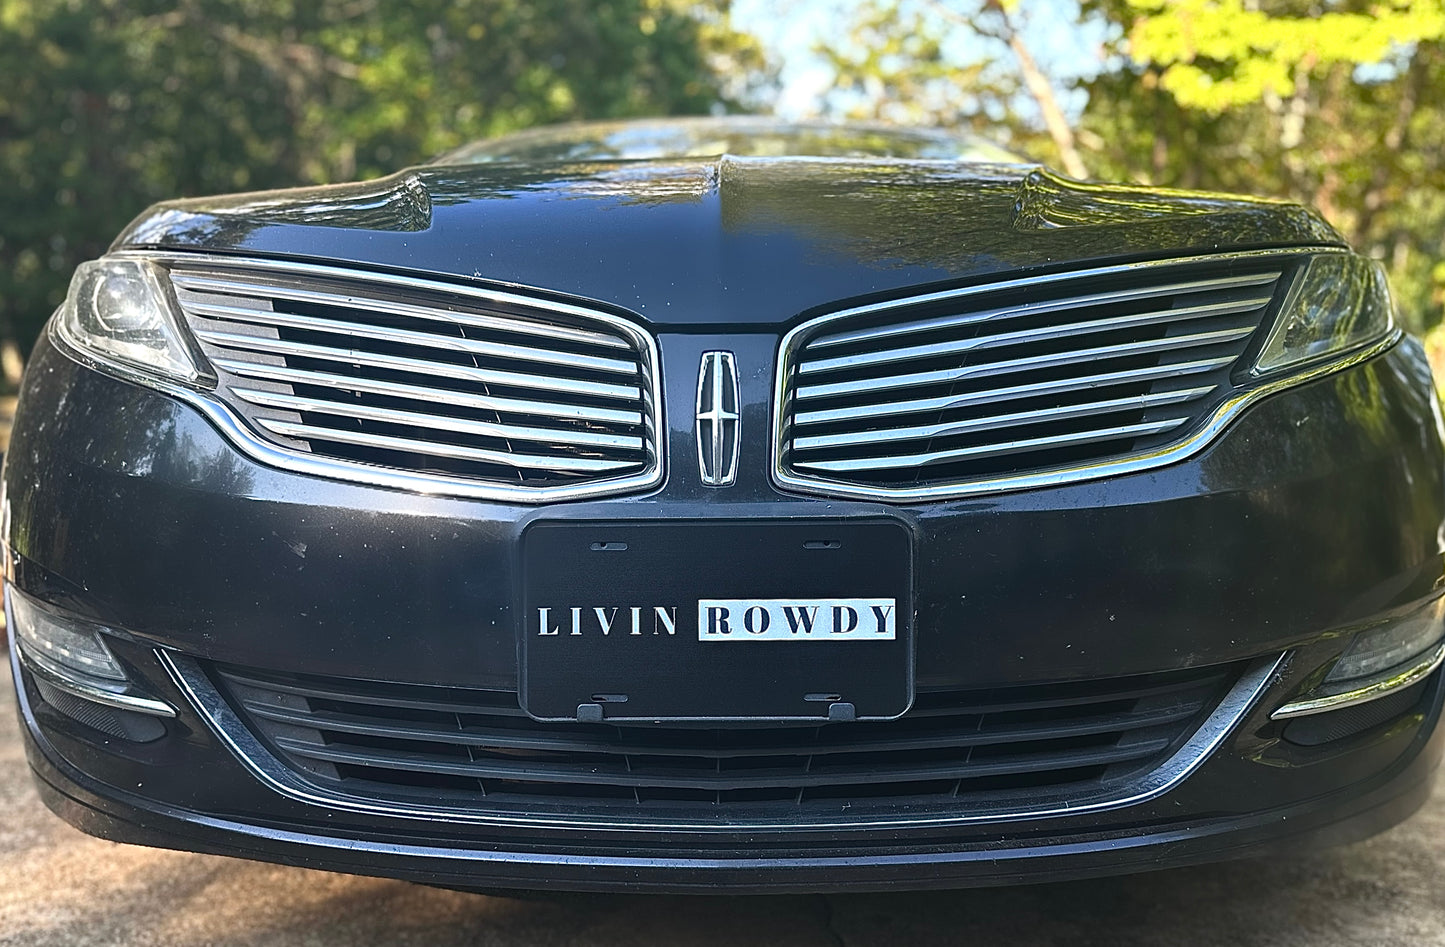 Basic LIVIN ROWDY car tag